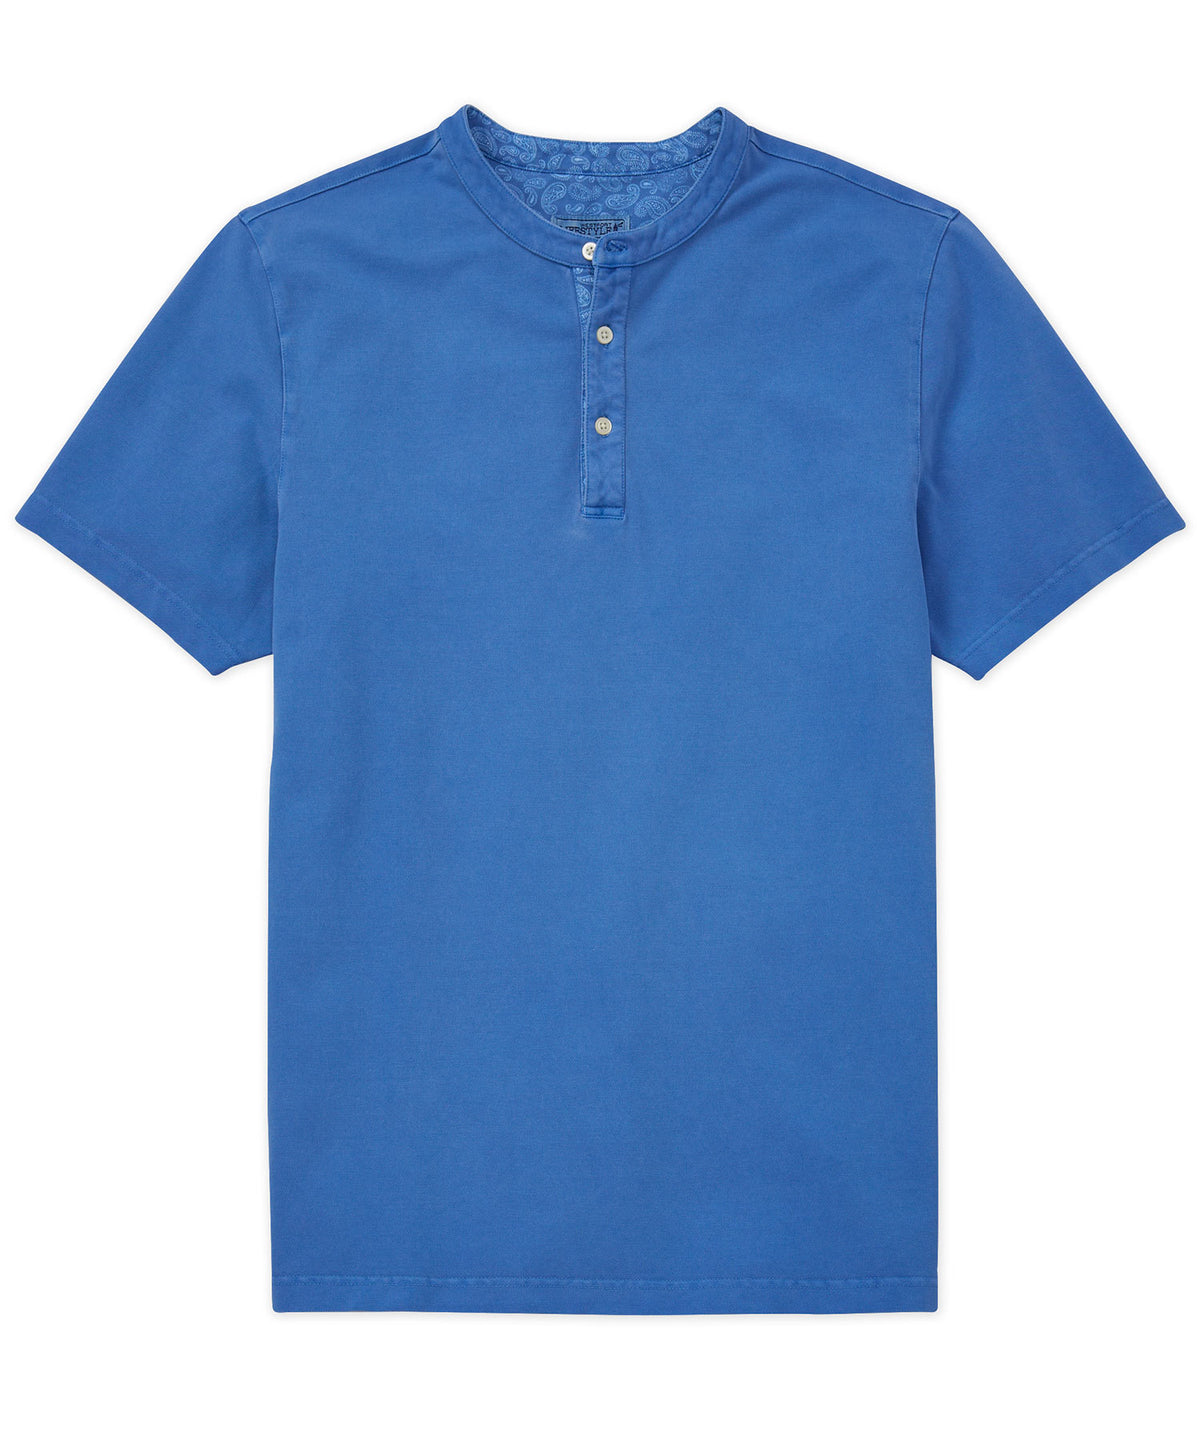 Westport Lifestyle Short Sleeve Garment Dyed Pique Henley Knit Shirt